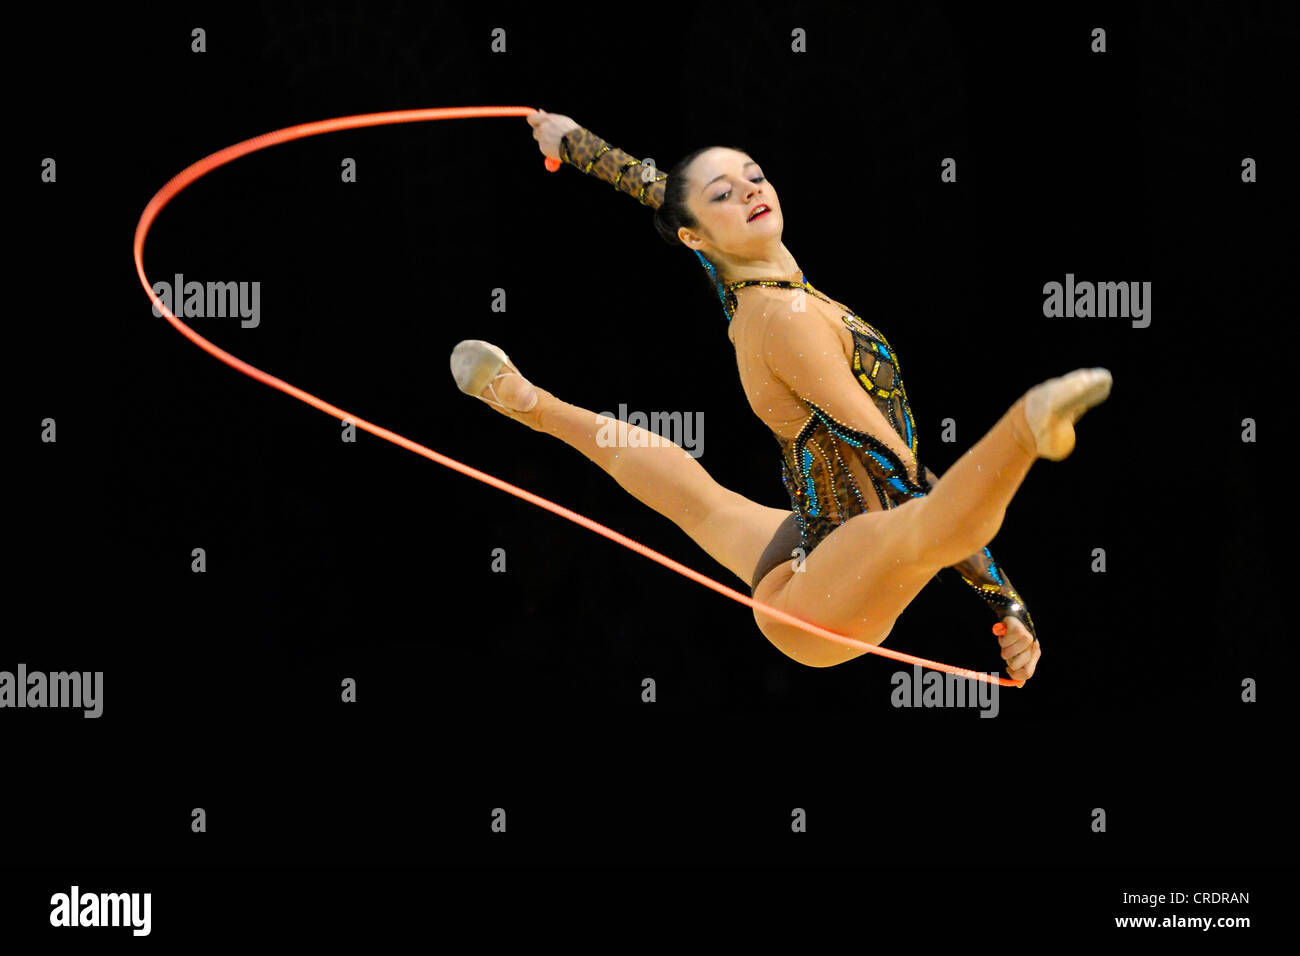 Frau macht rhythmische Gymnastik mit Seil Stockfotografie - Alamy